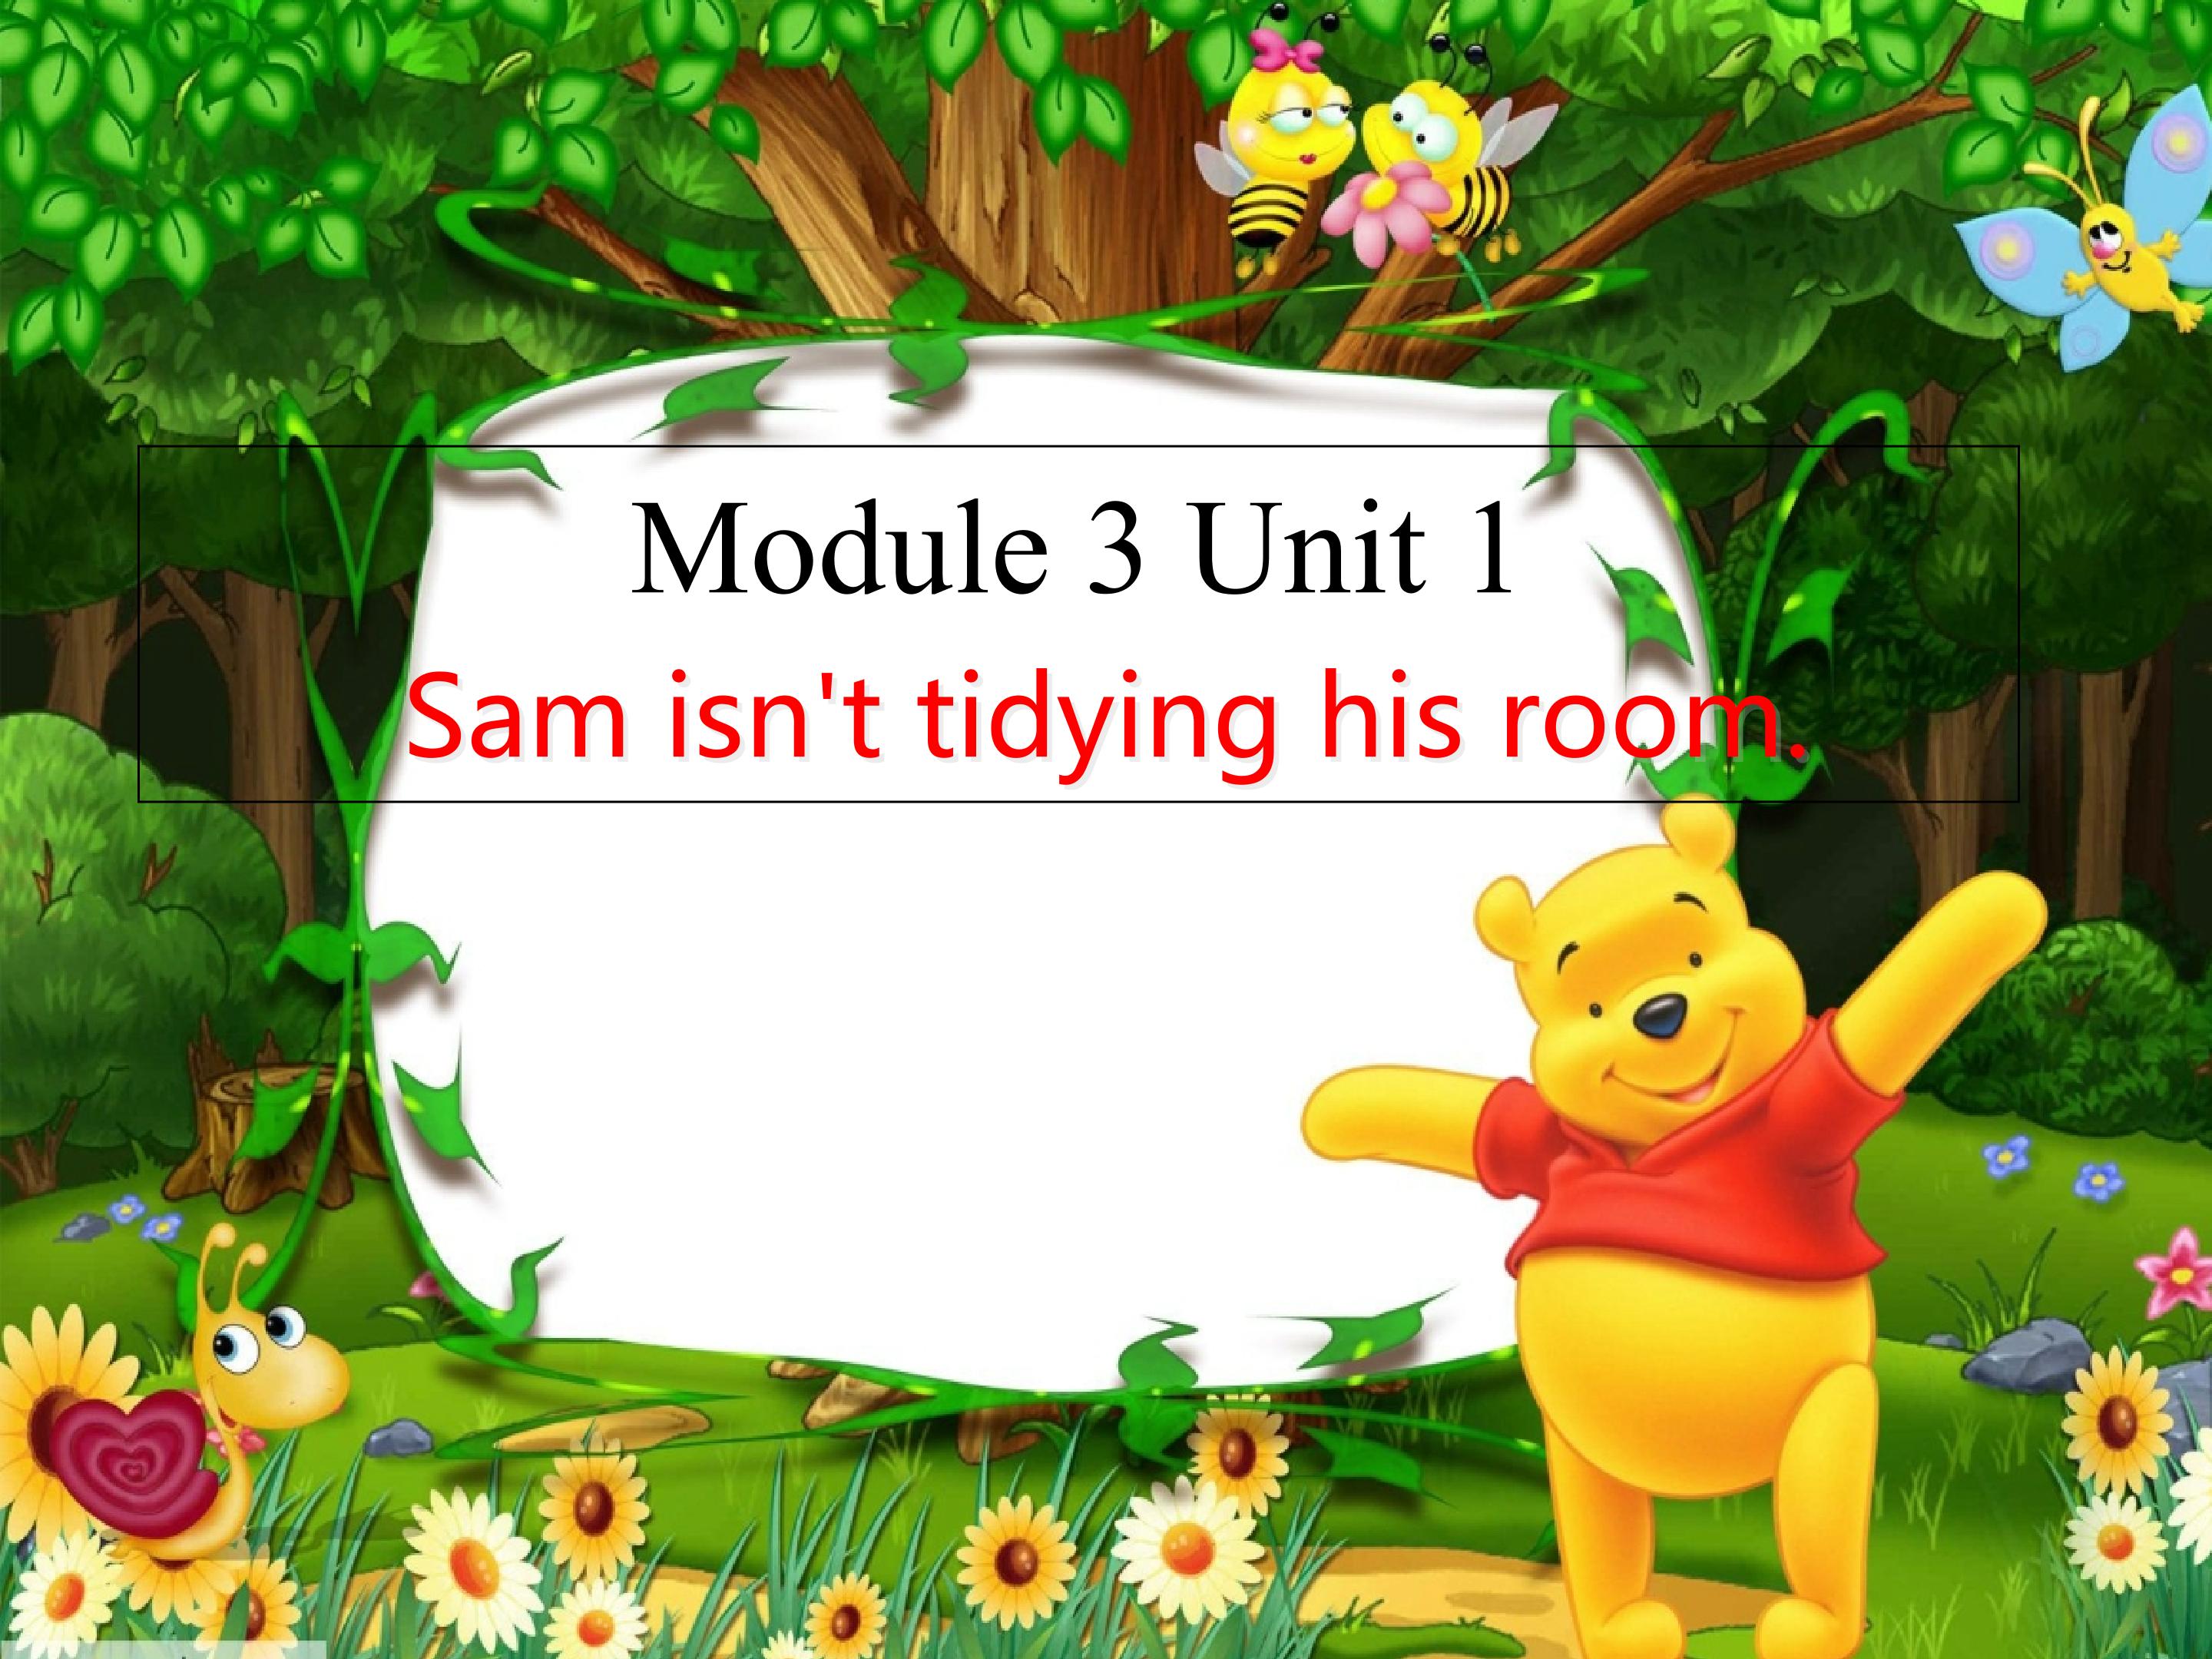 Module3Unit1 Sam isn't tidying his room.